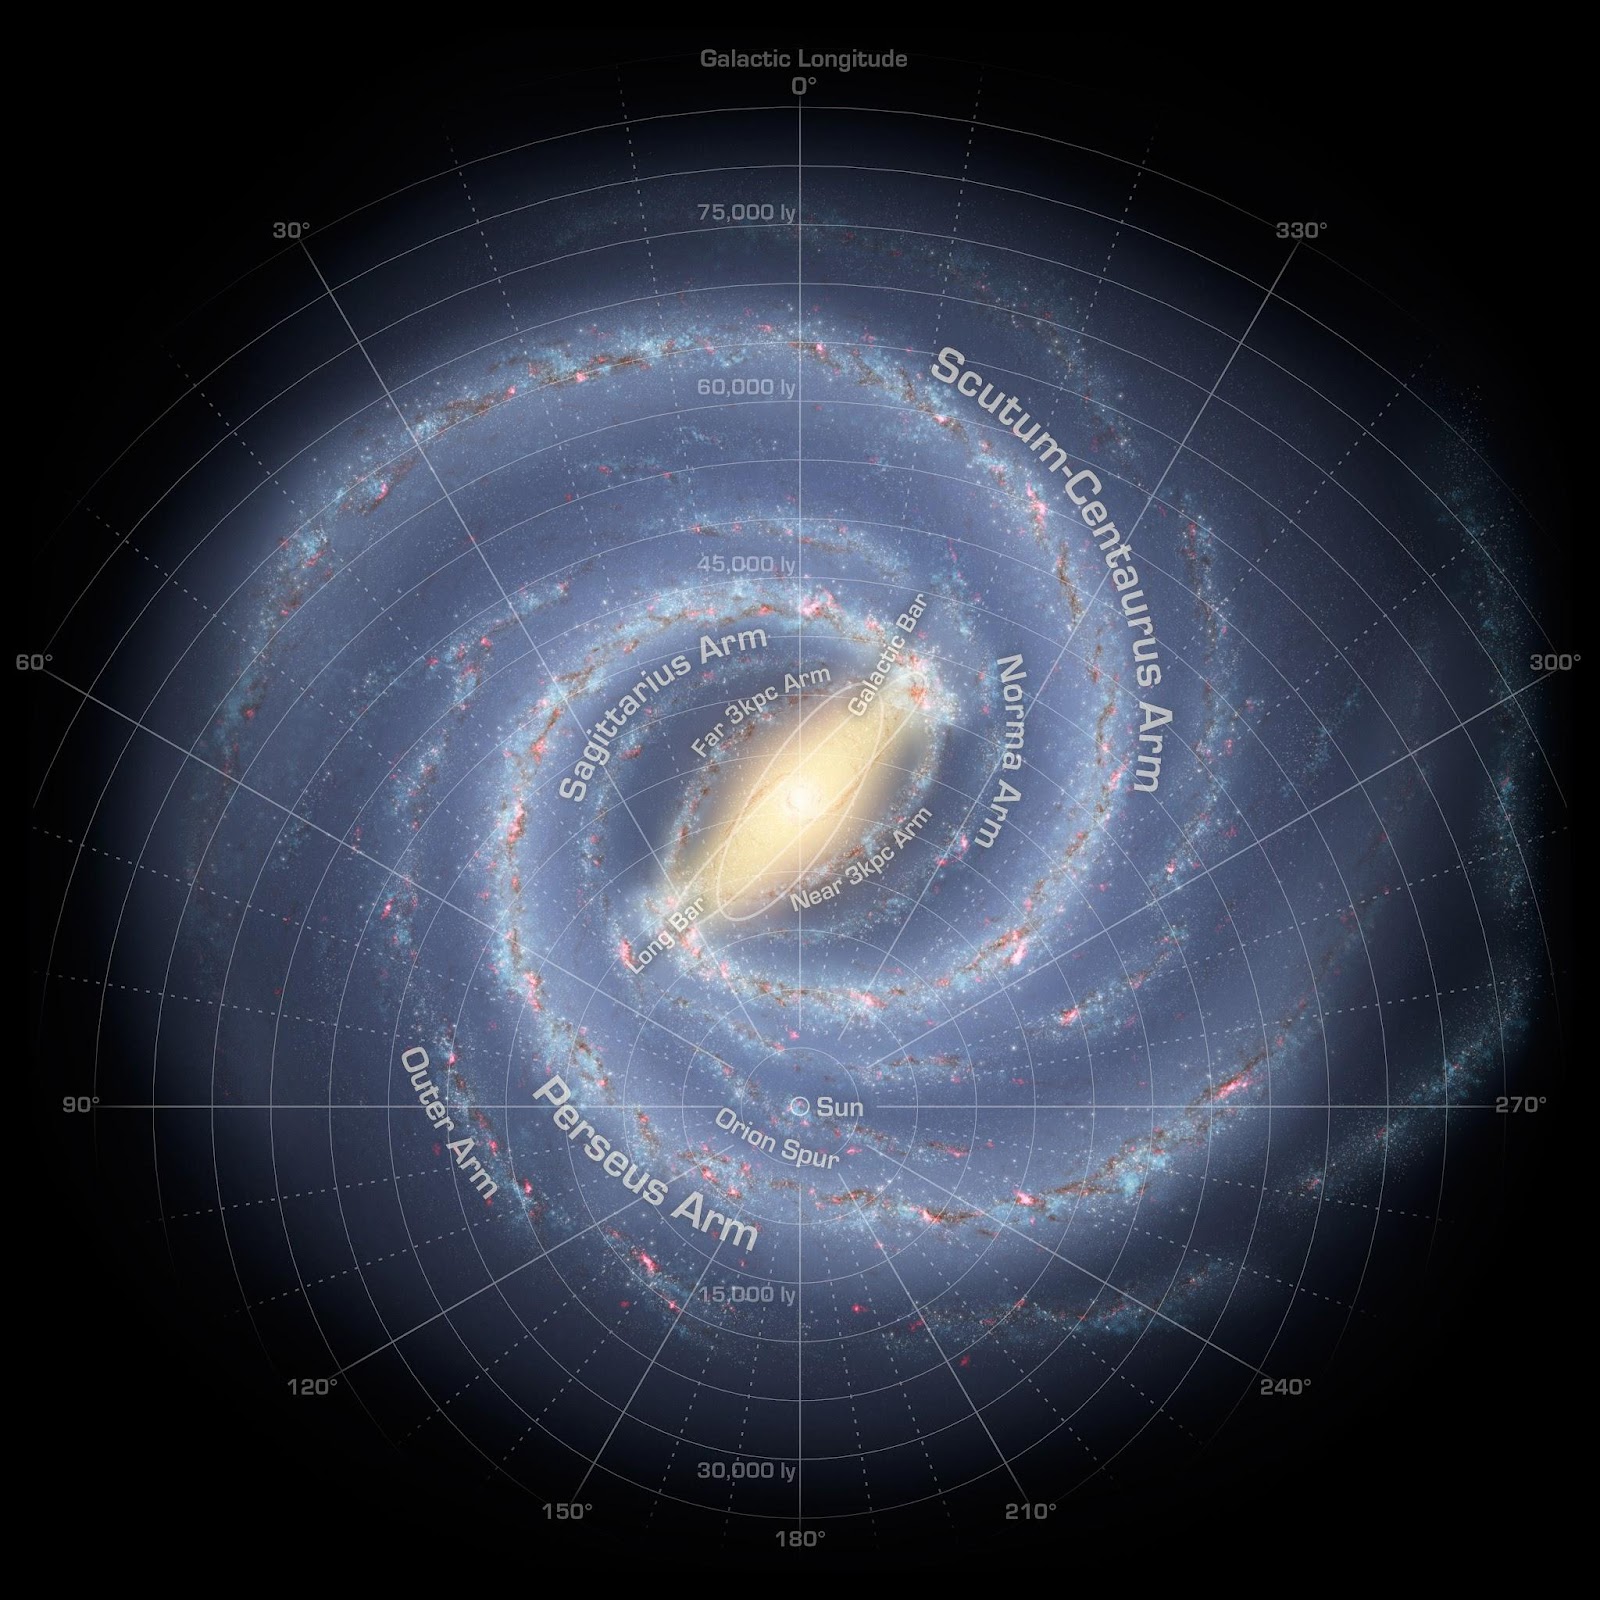 The Milky Way Spiral Galaxy